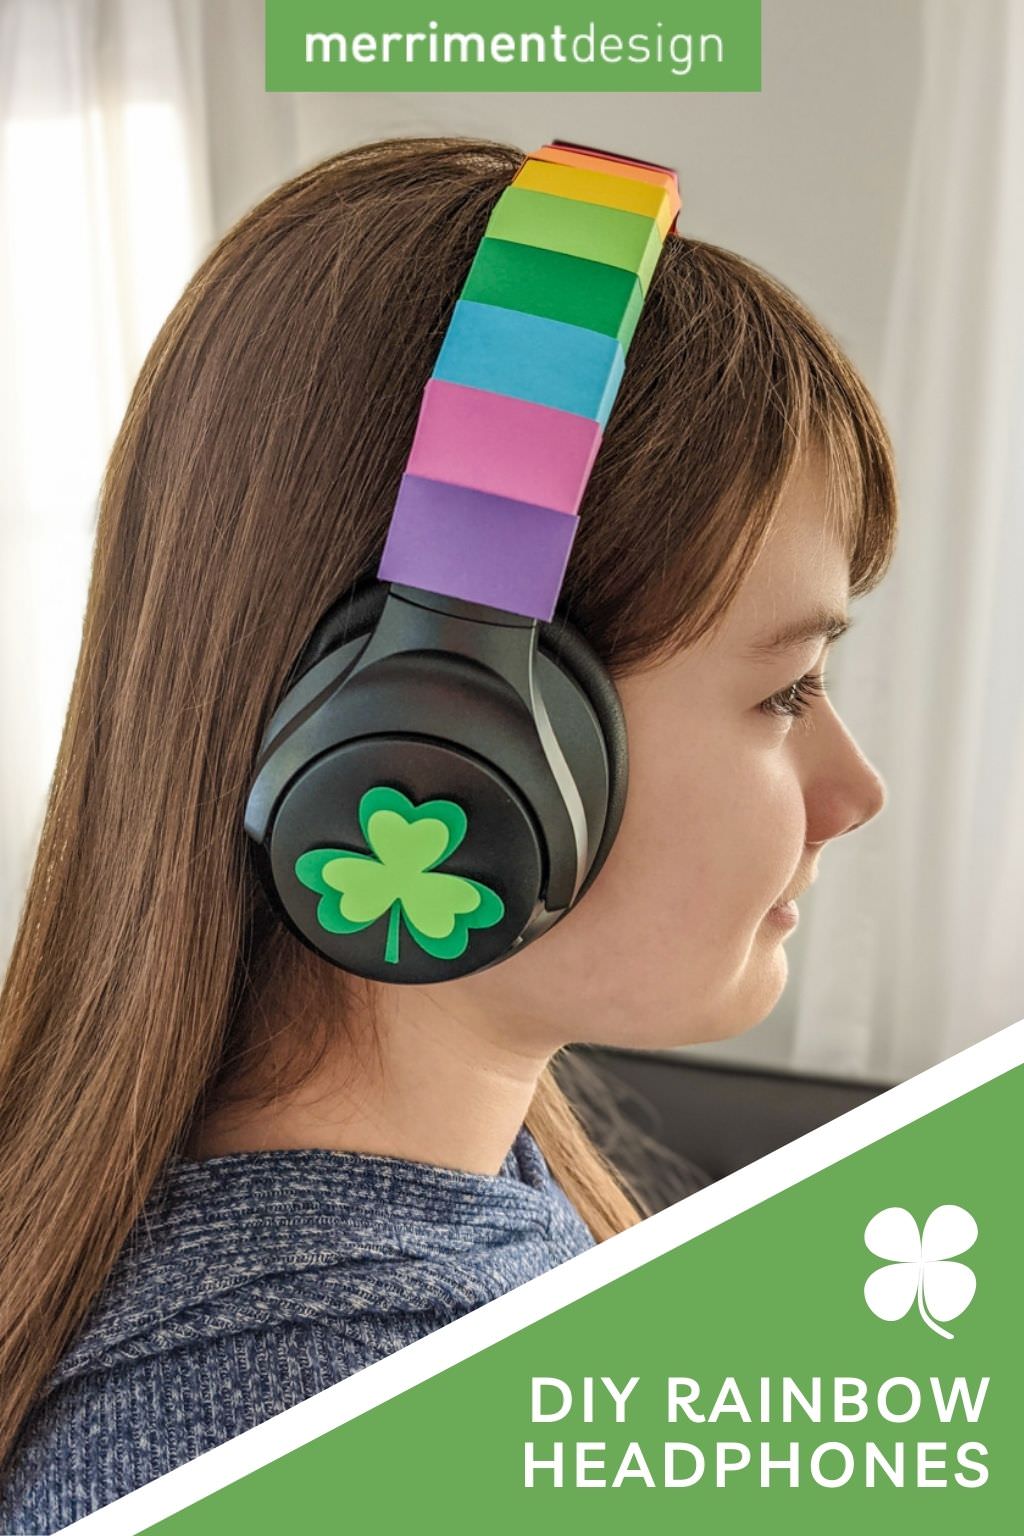 DIY rainbow headphones craft idea for St. Patrick's Day